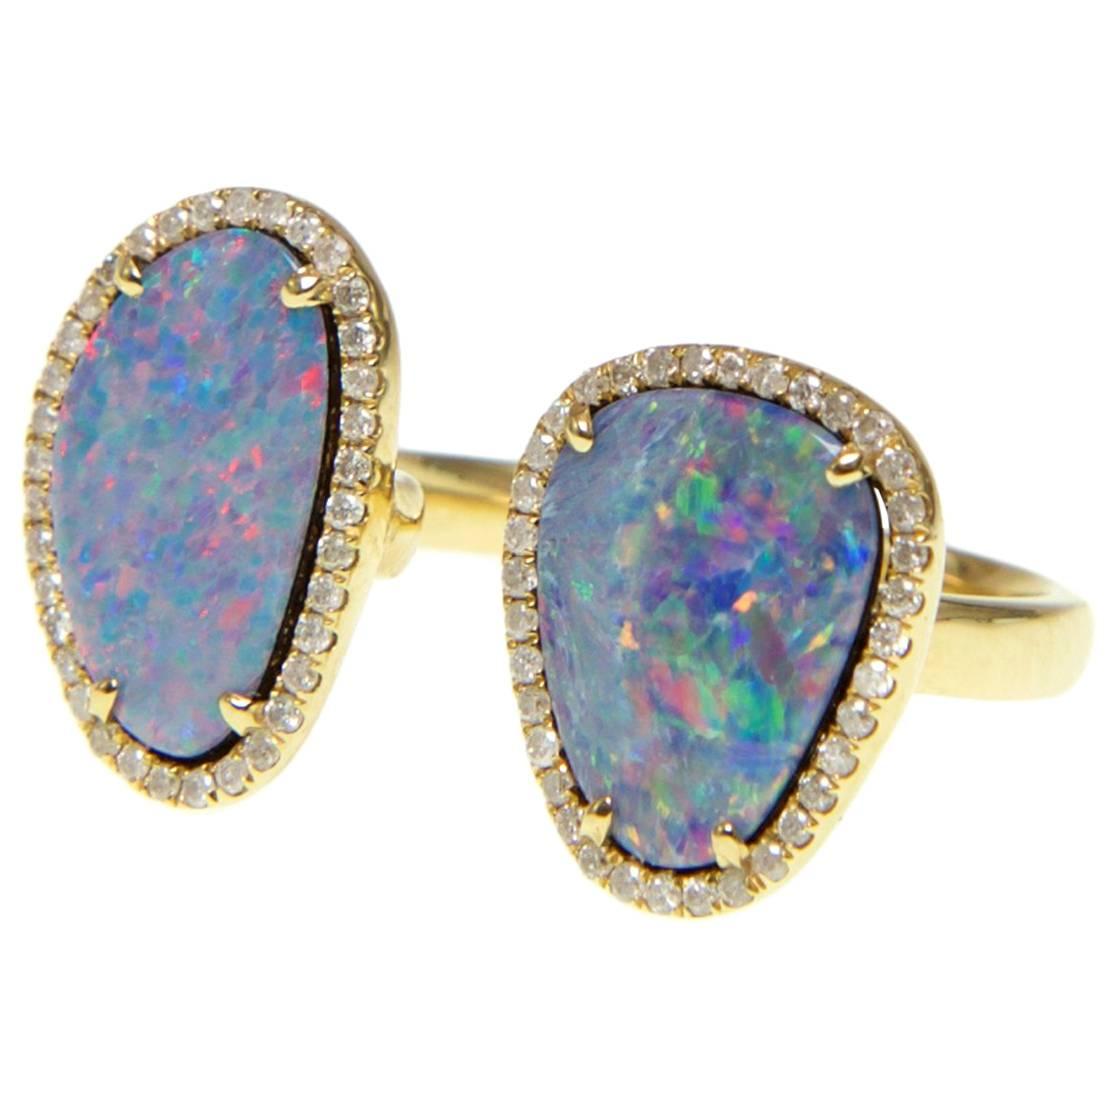 Double Opal Slice Diamond Ring